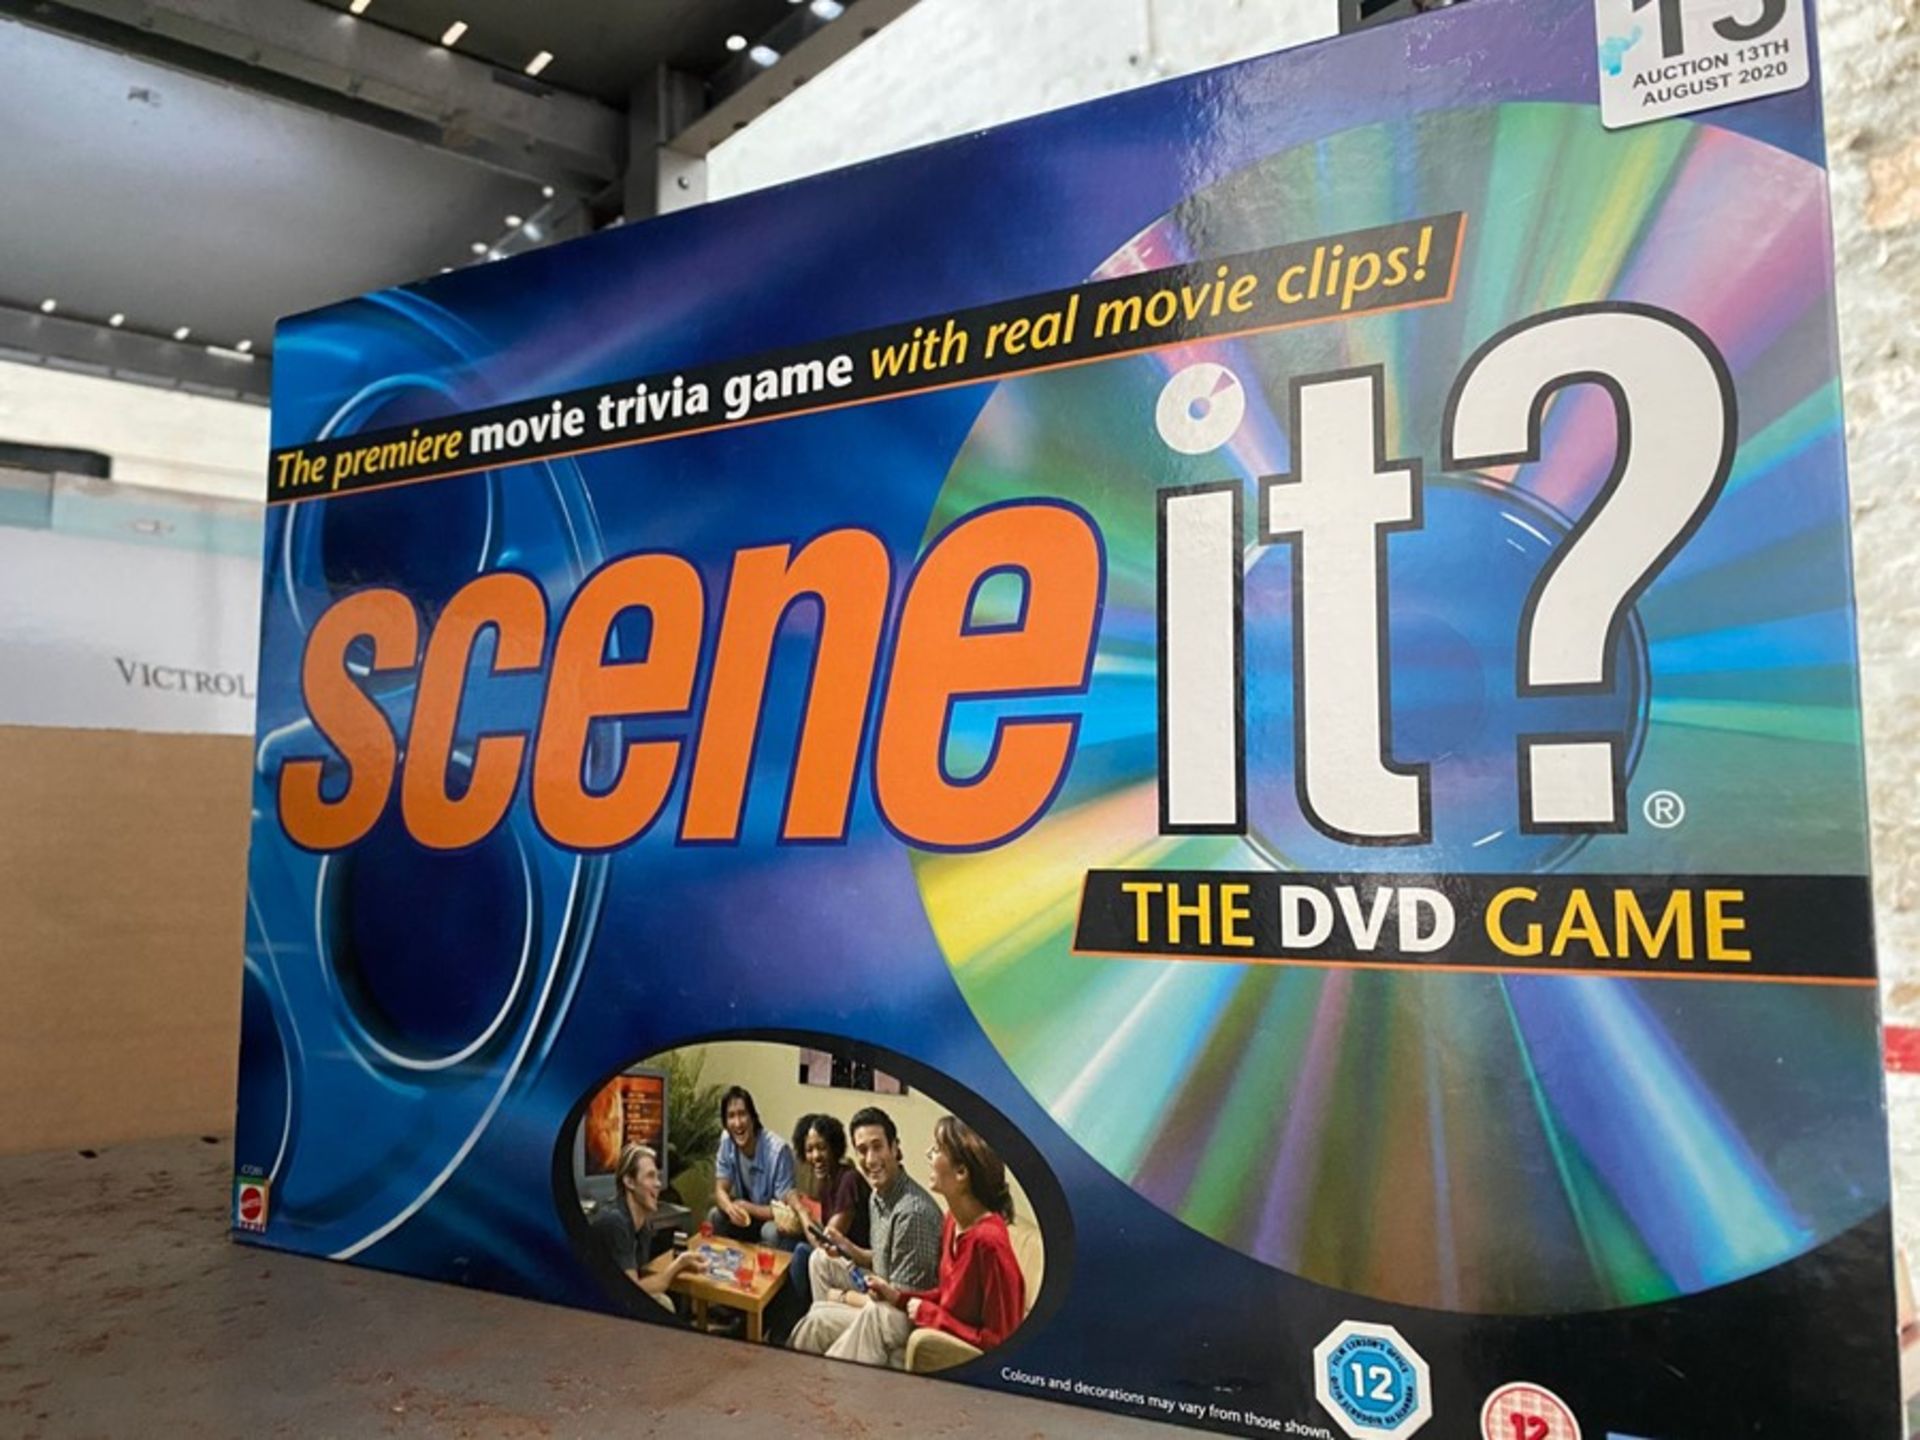 SCENE IT DVD GAME - Image 2 of 2